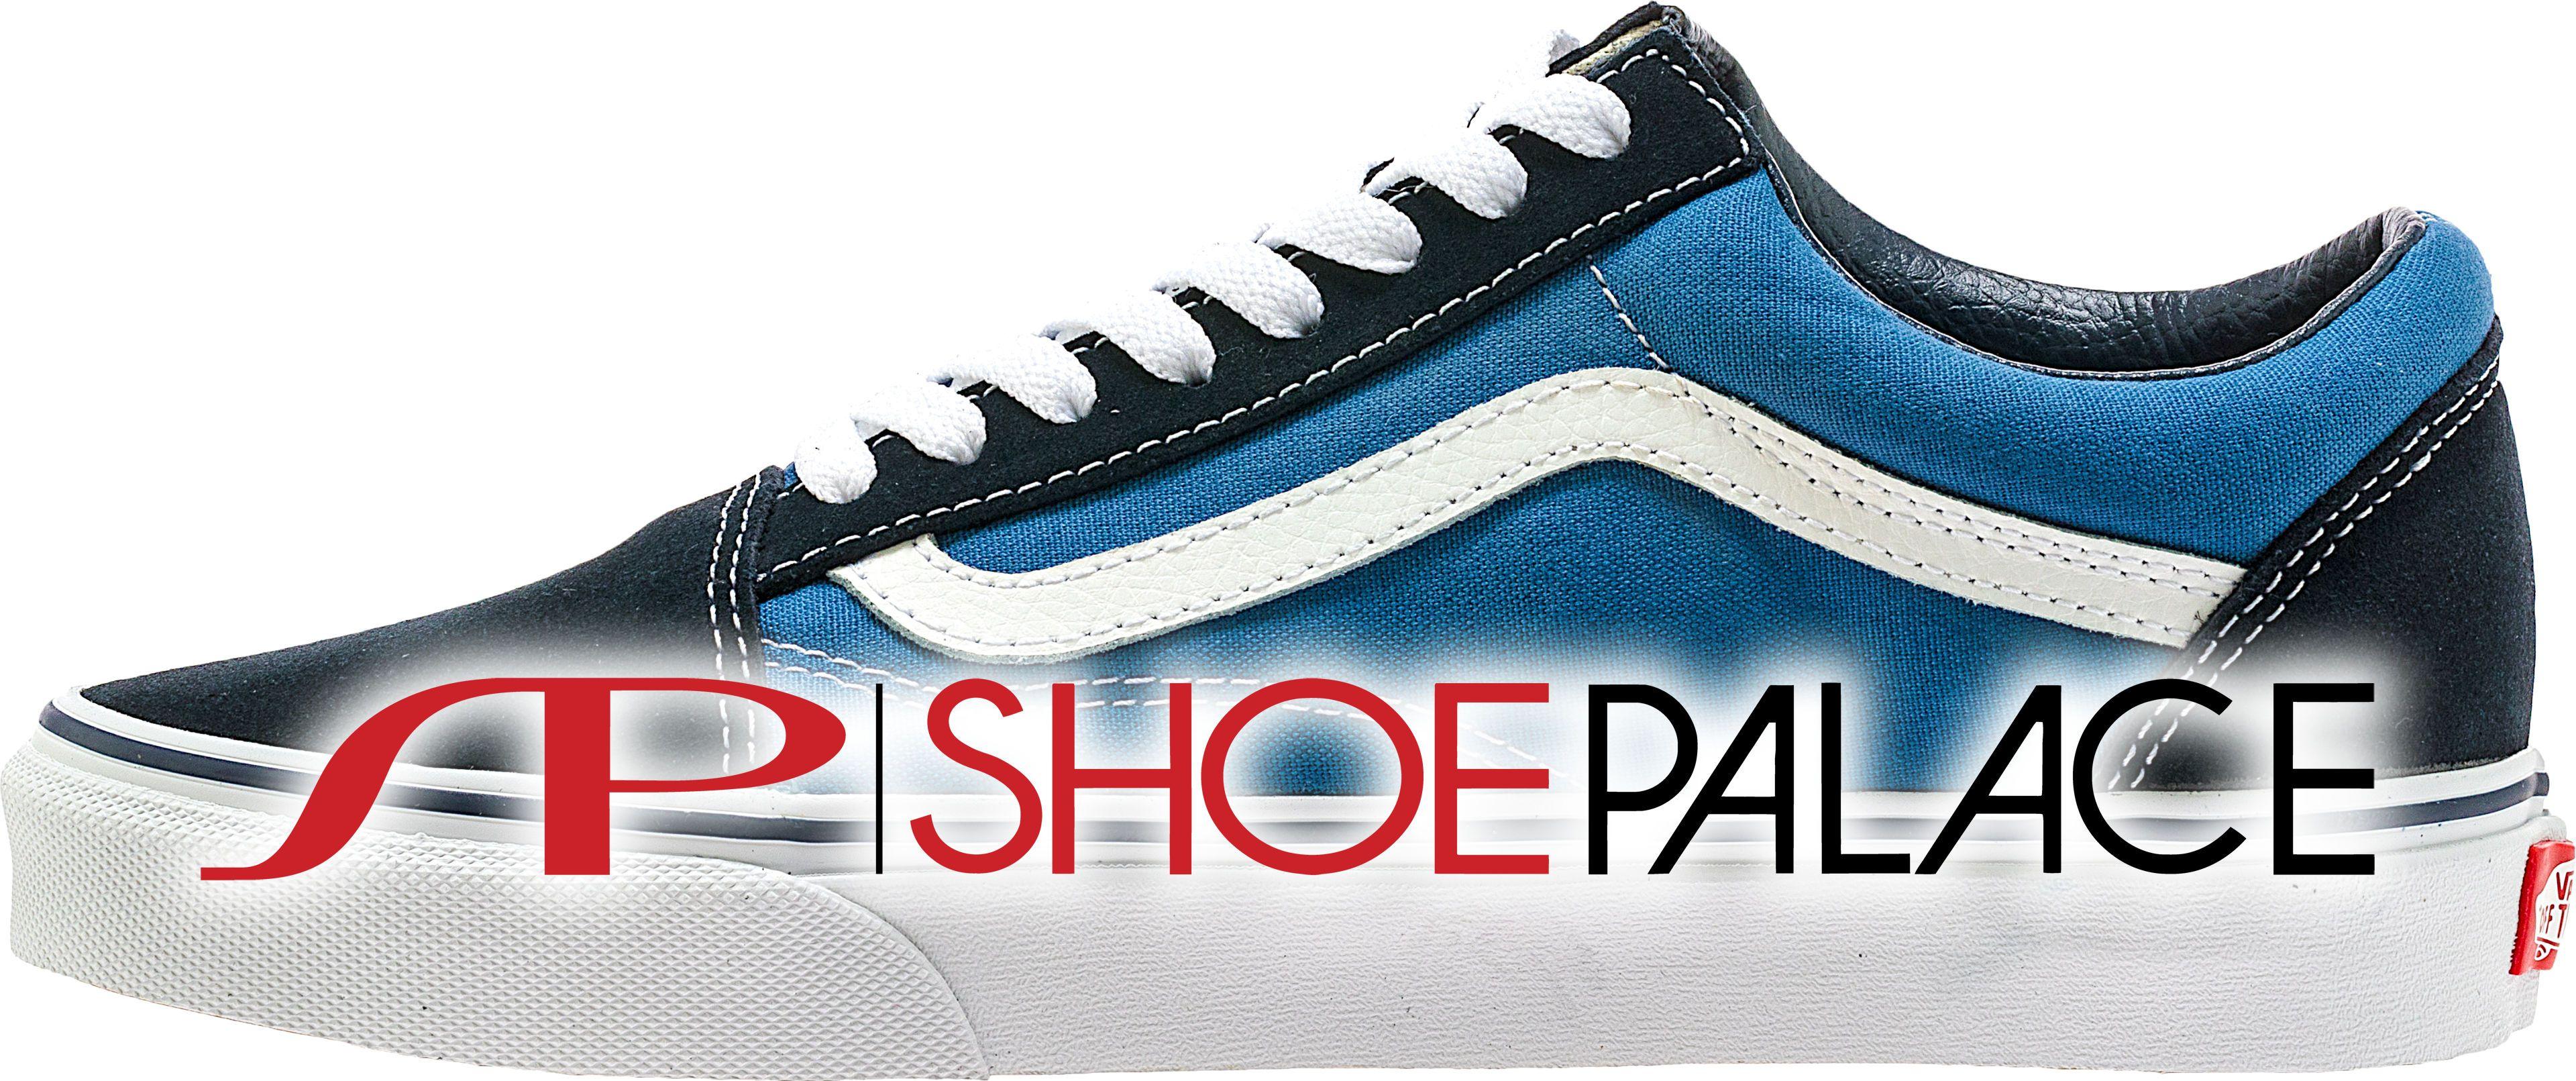 White and Blue Shoe Brand Logo - Vans D3HNVY Old Skool Low Mens Skate Shoe (Navy Blue White) At Shoe